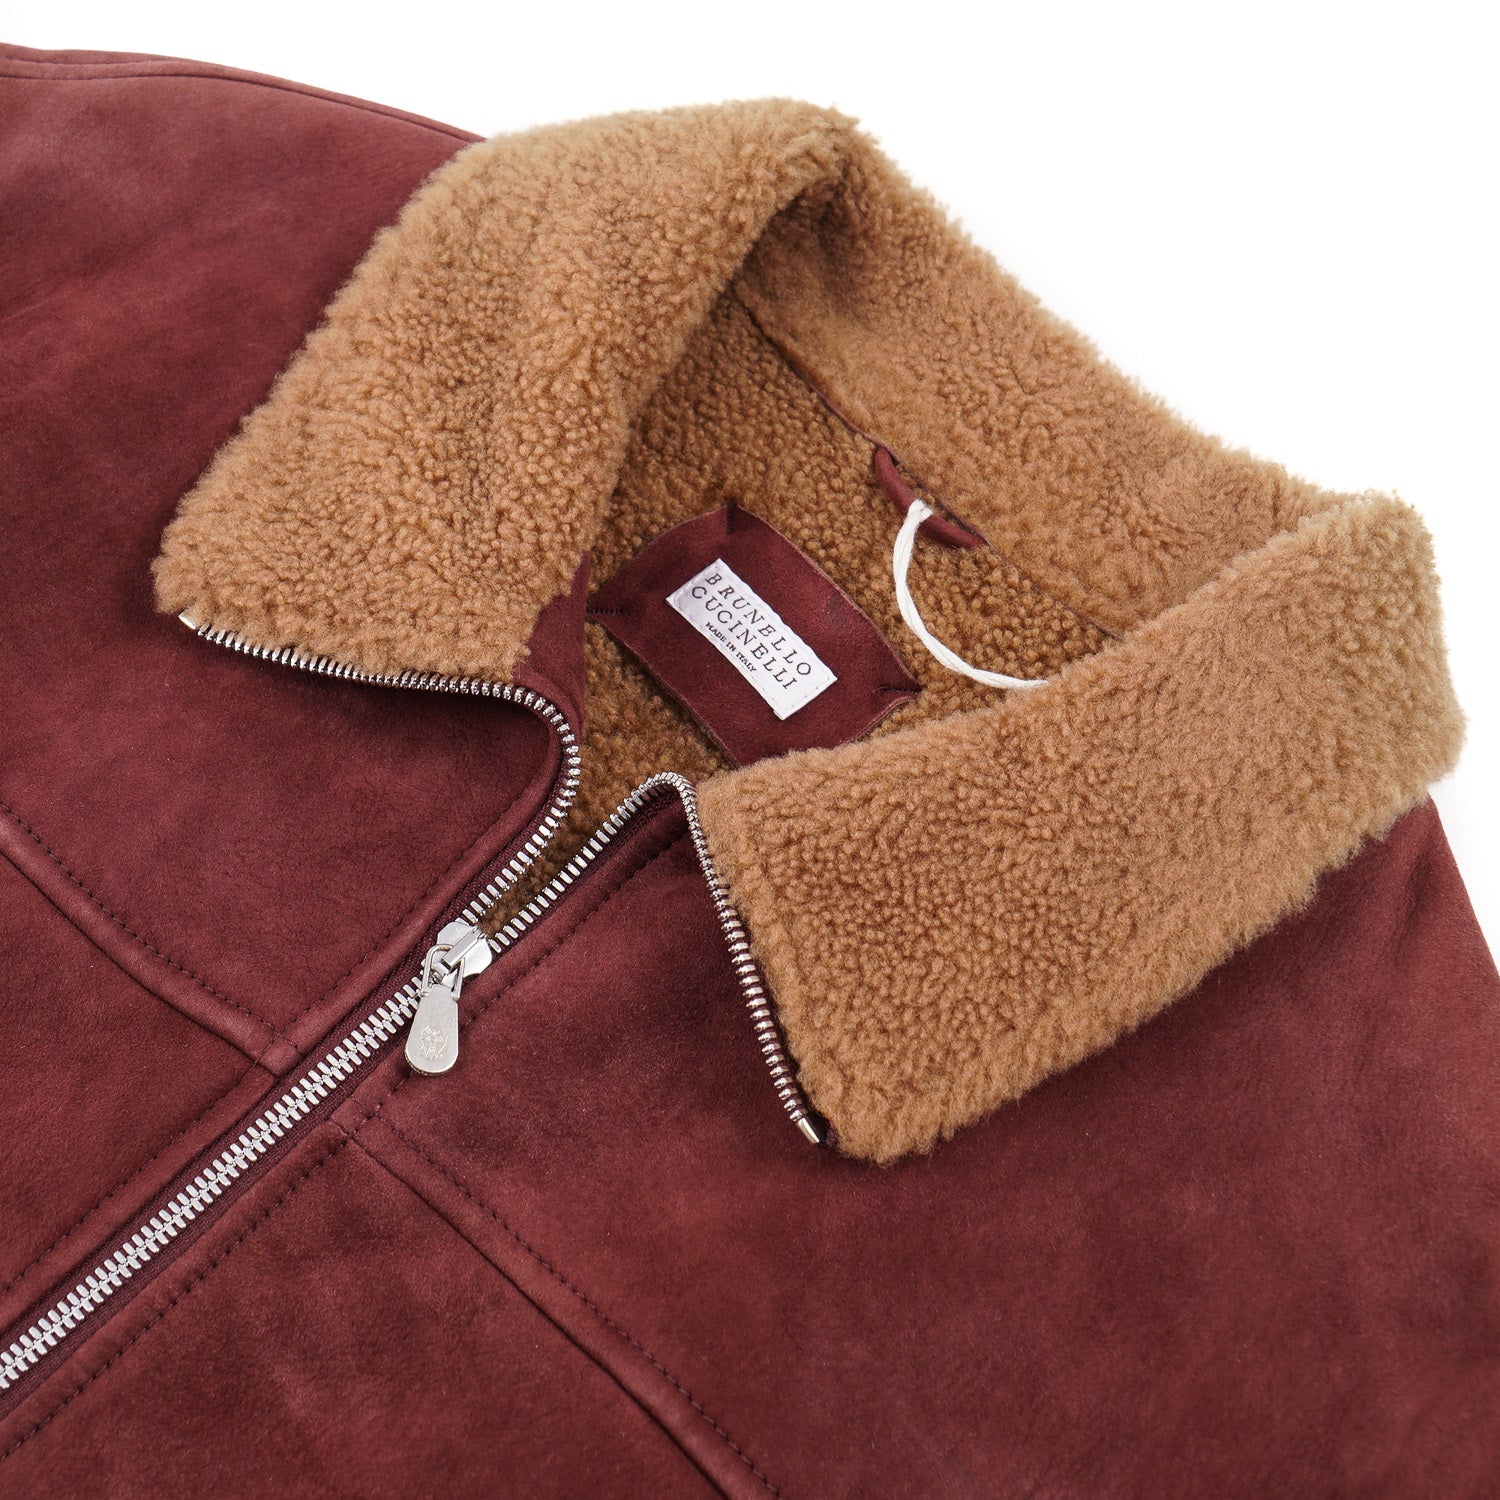 Brunello Cucinelli Shearling Leather Pilot's Jacket - Top Shelf Apparel